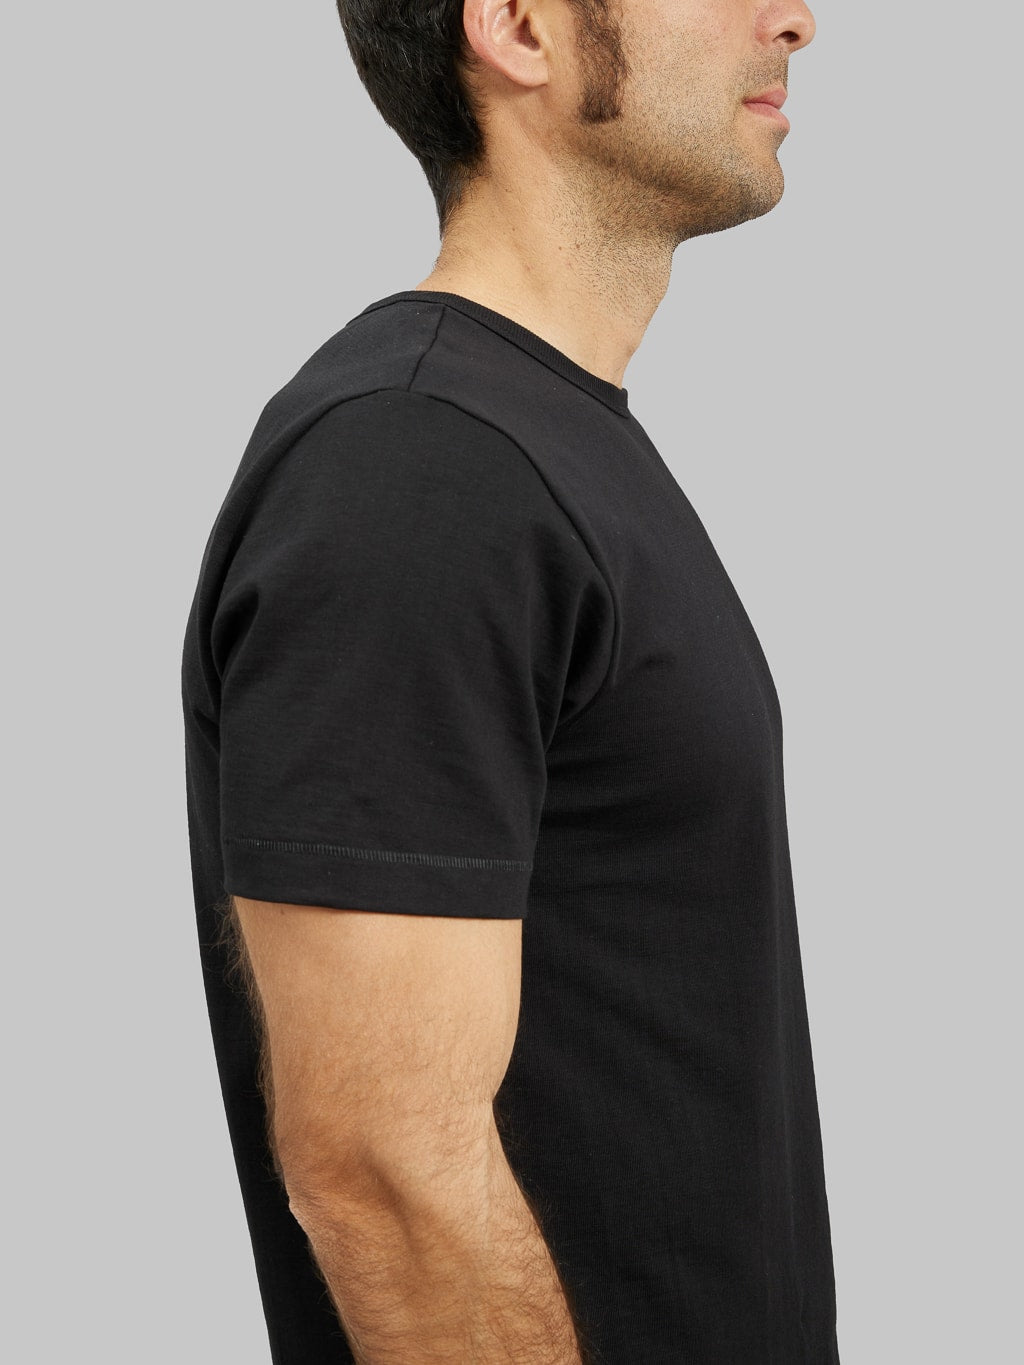 merz b schwanen good originals loopwheeled Tshirt classic fit black sleeve details